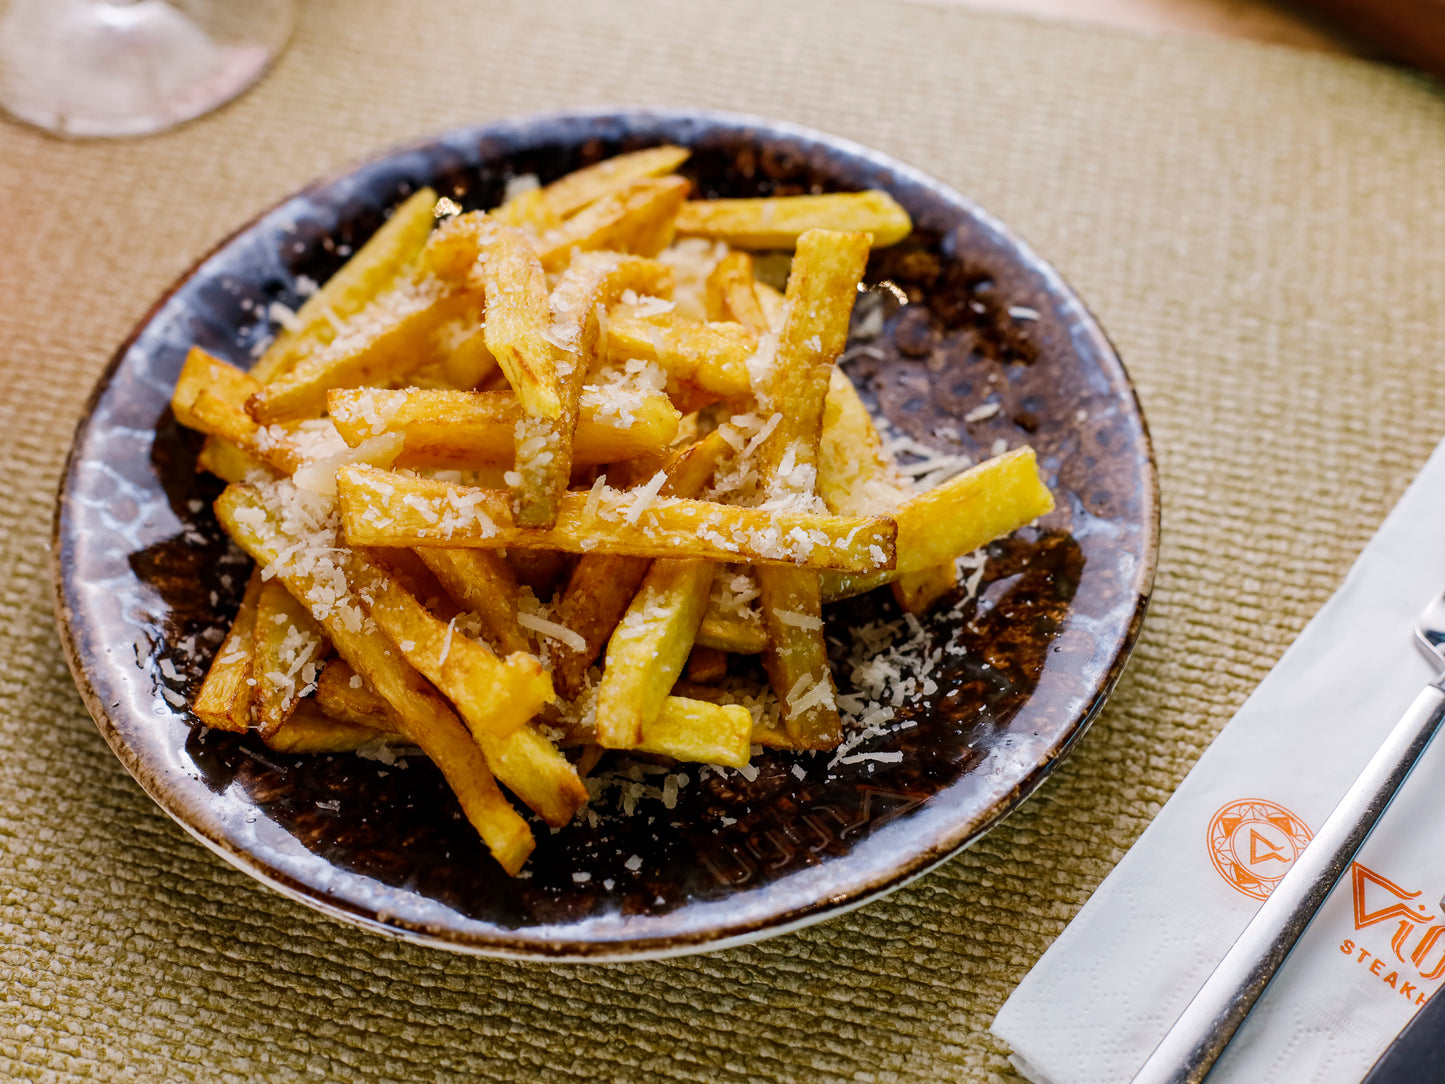 Parmigiano Reggiano Truffle Fries 160g